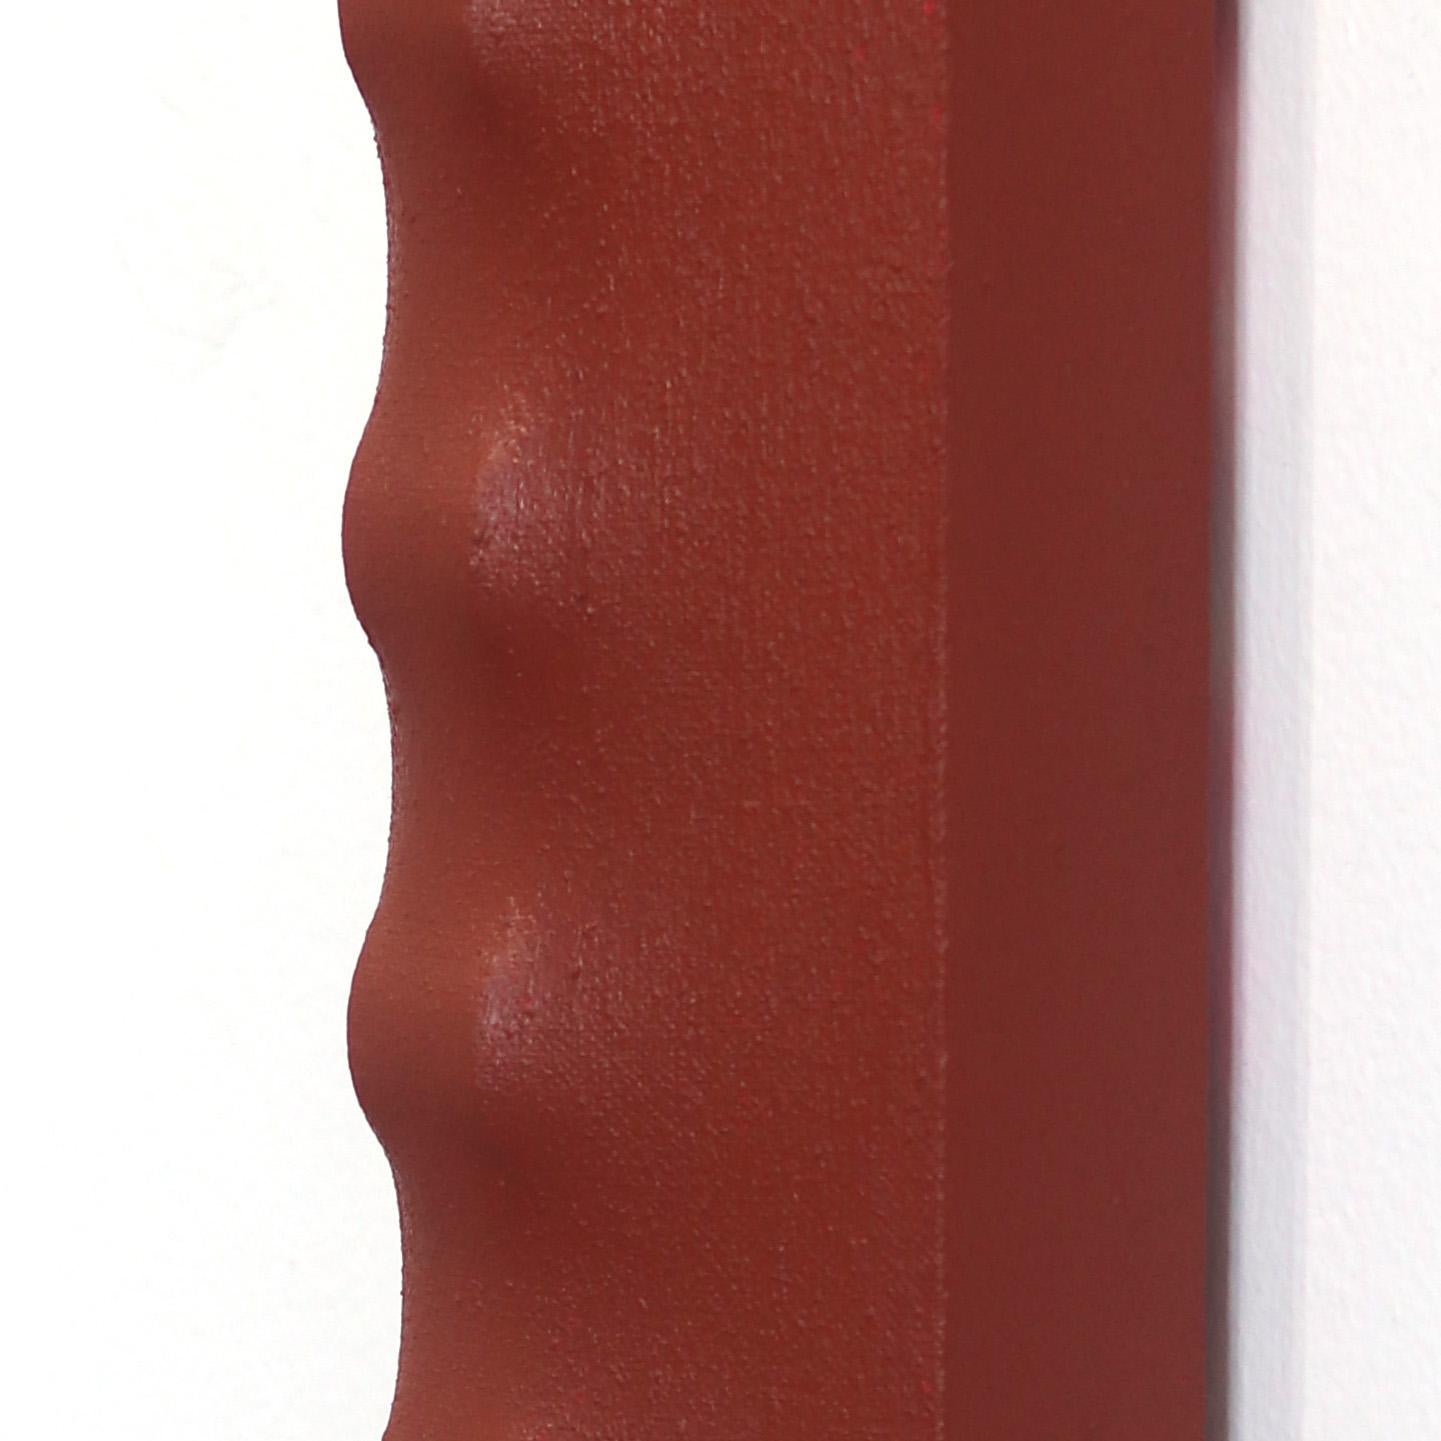 Slims CNP - Dreidimensionales minimalistisches abstraktes rotes skulpturales Gemälde in Skulptur (Post-Minimalismus), Painting, von Len Klikunas